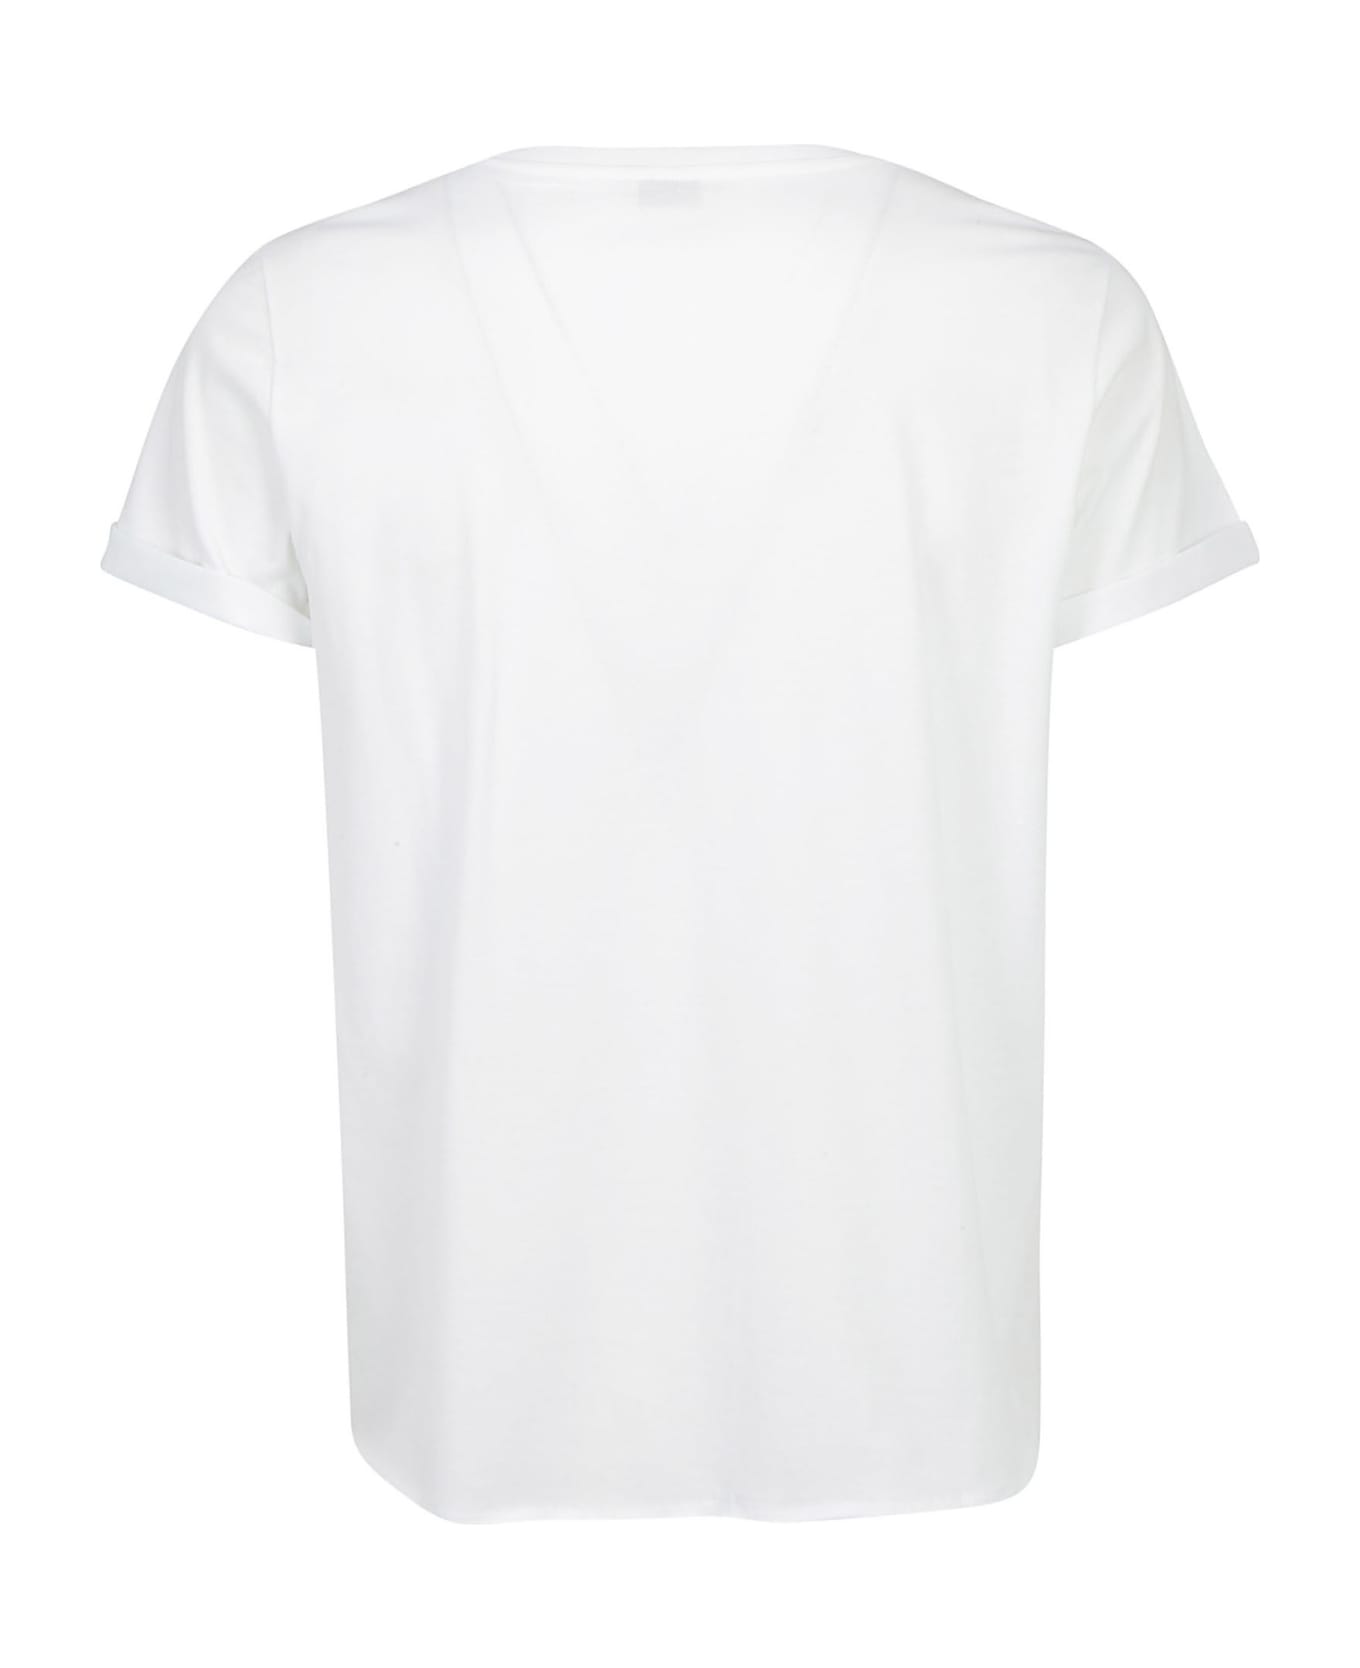 Saint Laurent T-shirt - Bianco